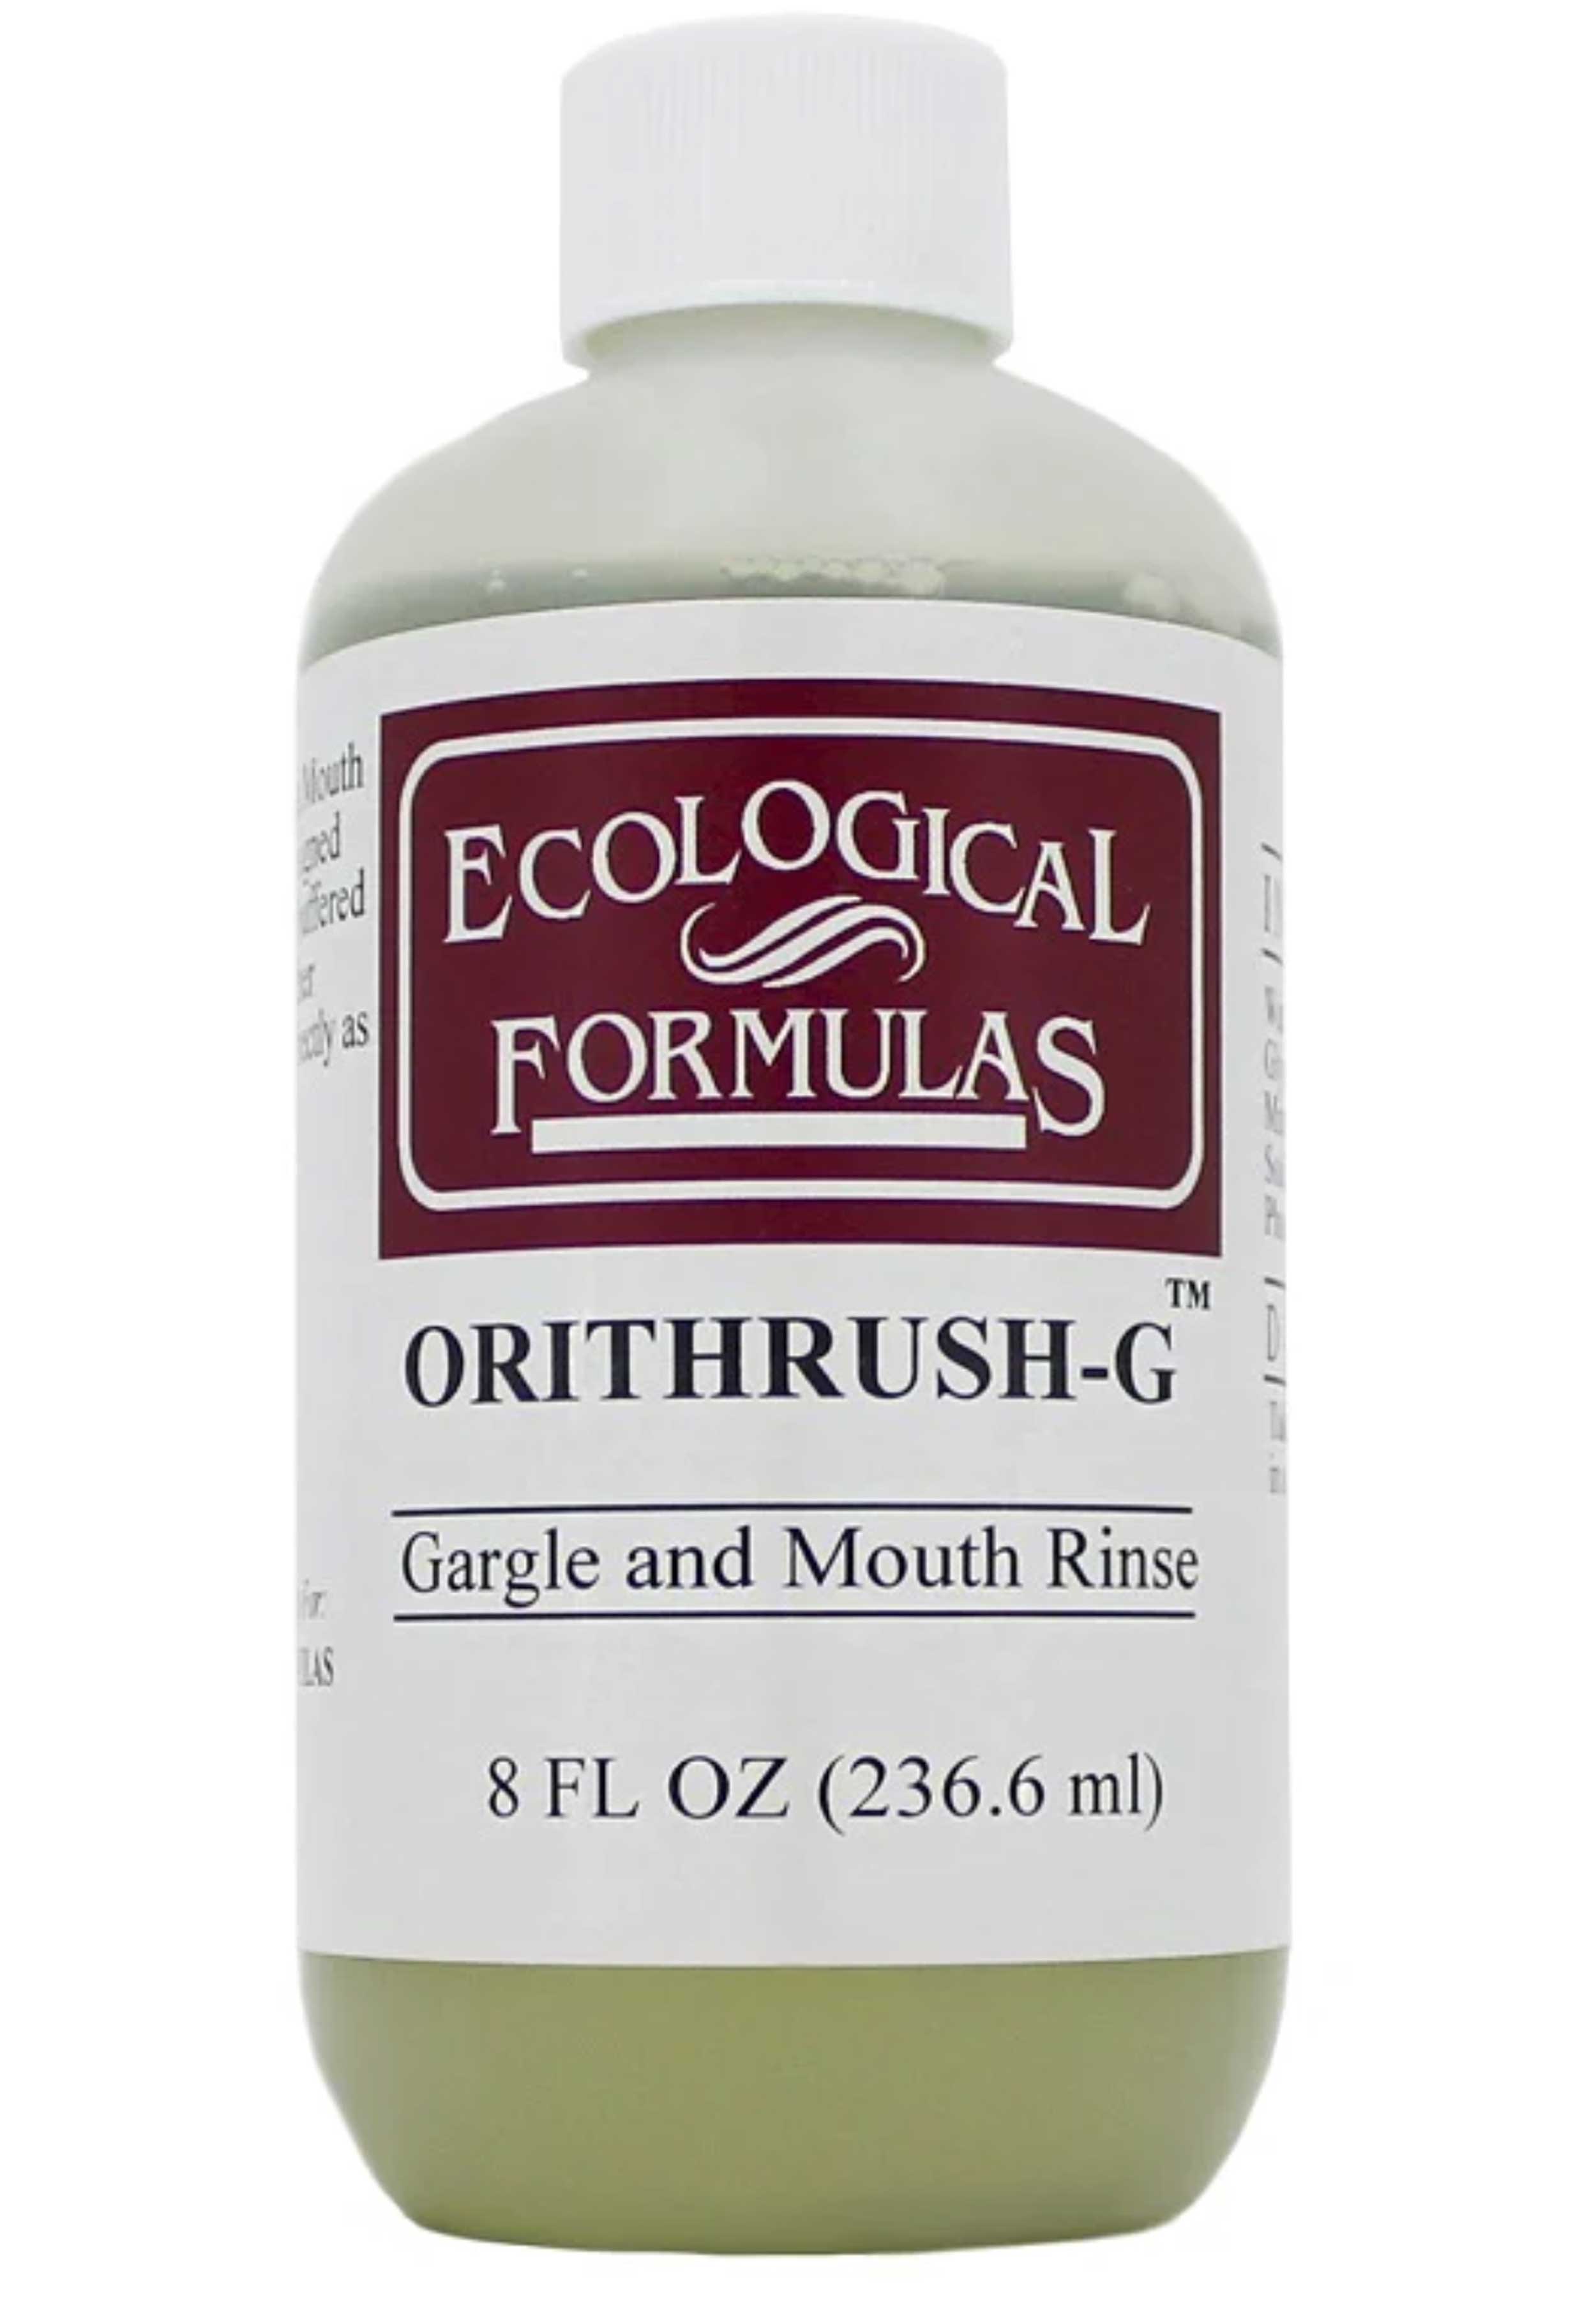 Ecological Formulas/Cardiovascular Research Orithrush-G